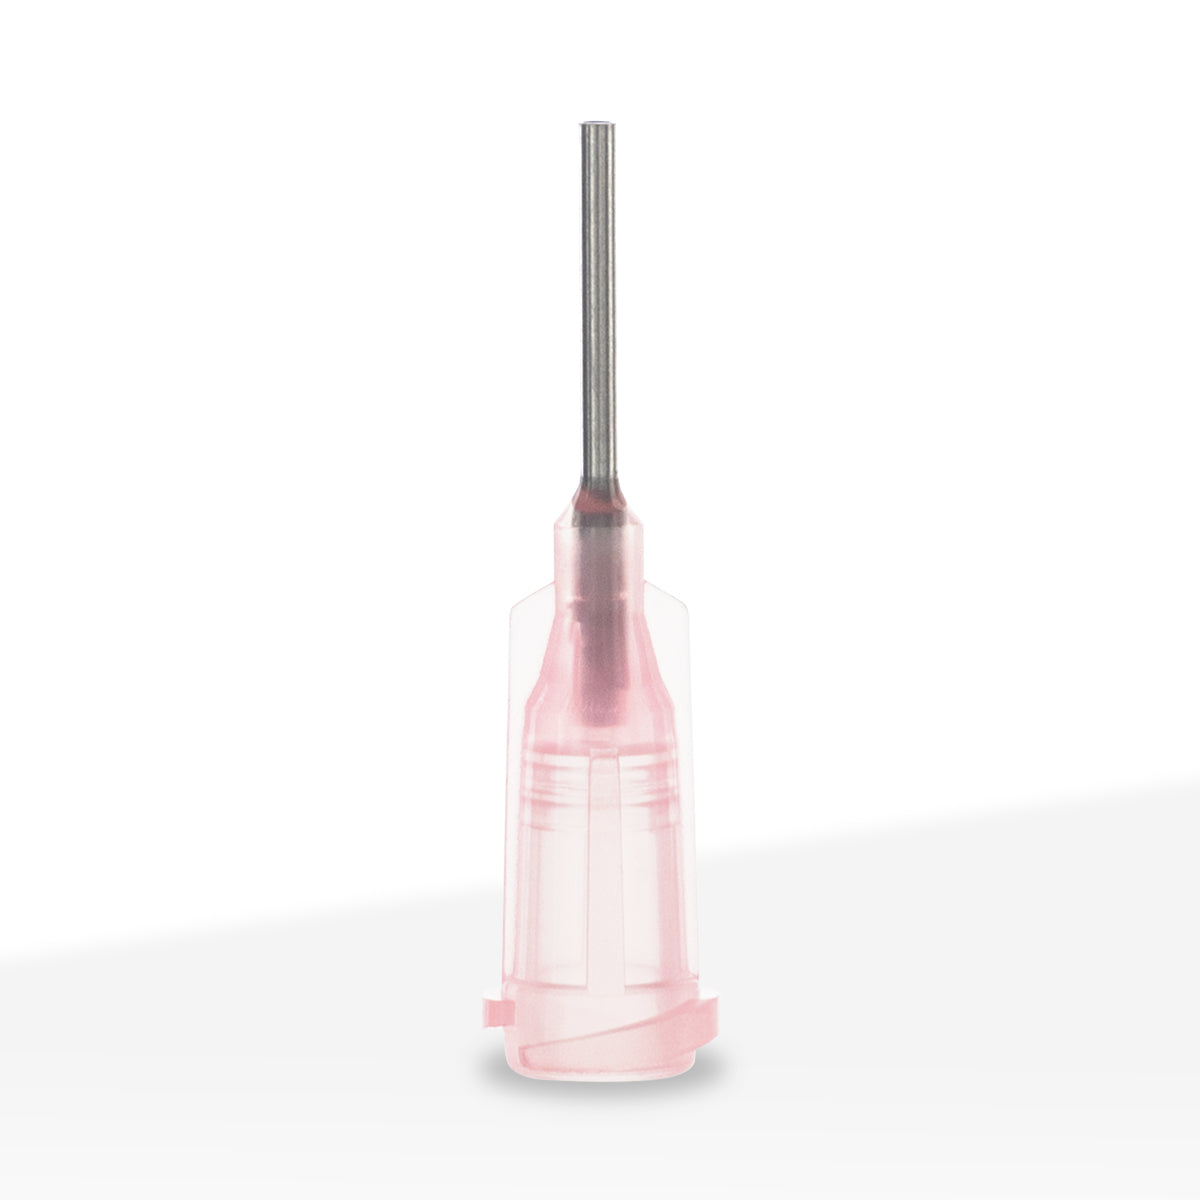 Thompson Duke Industrial | 18 Gauge Needles (Pink) | 0.5- 15 Count